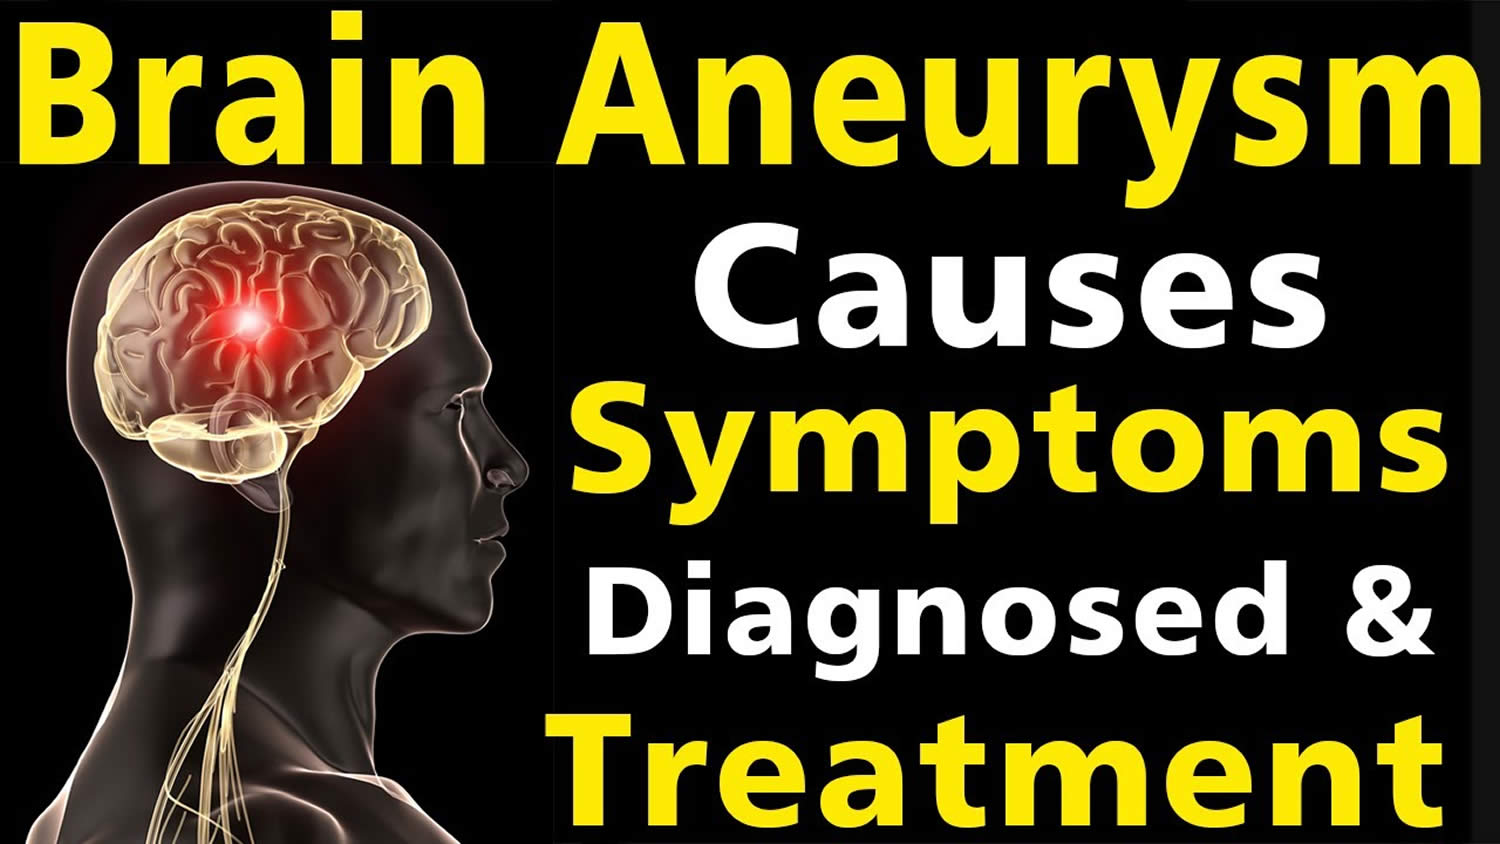 Brain Aneurysm Causes Symptoms Warning Signs Treatmen - vrogue.co